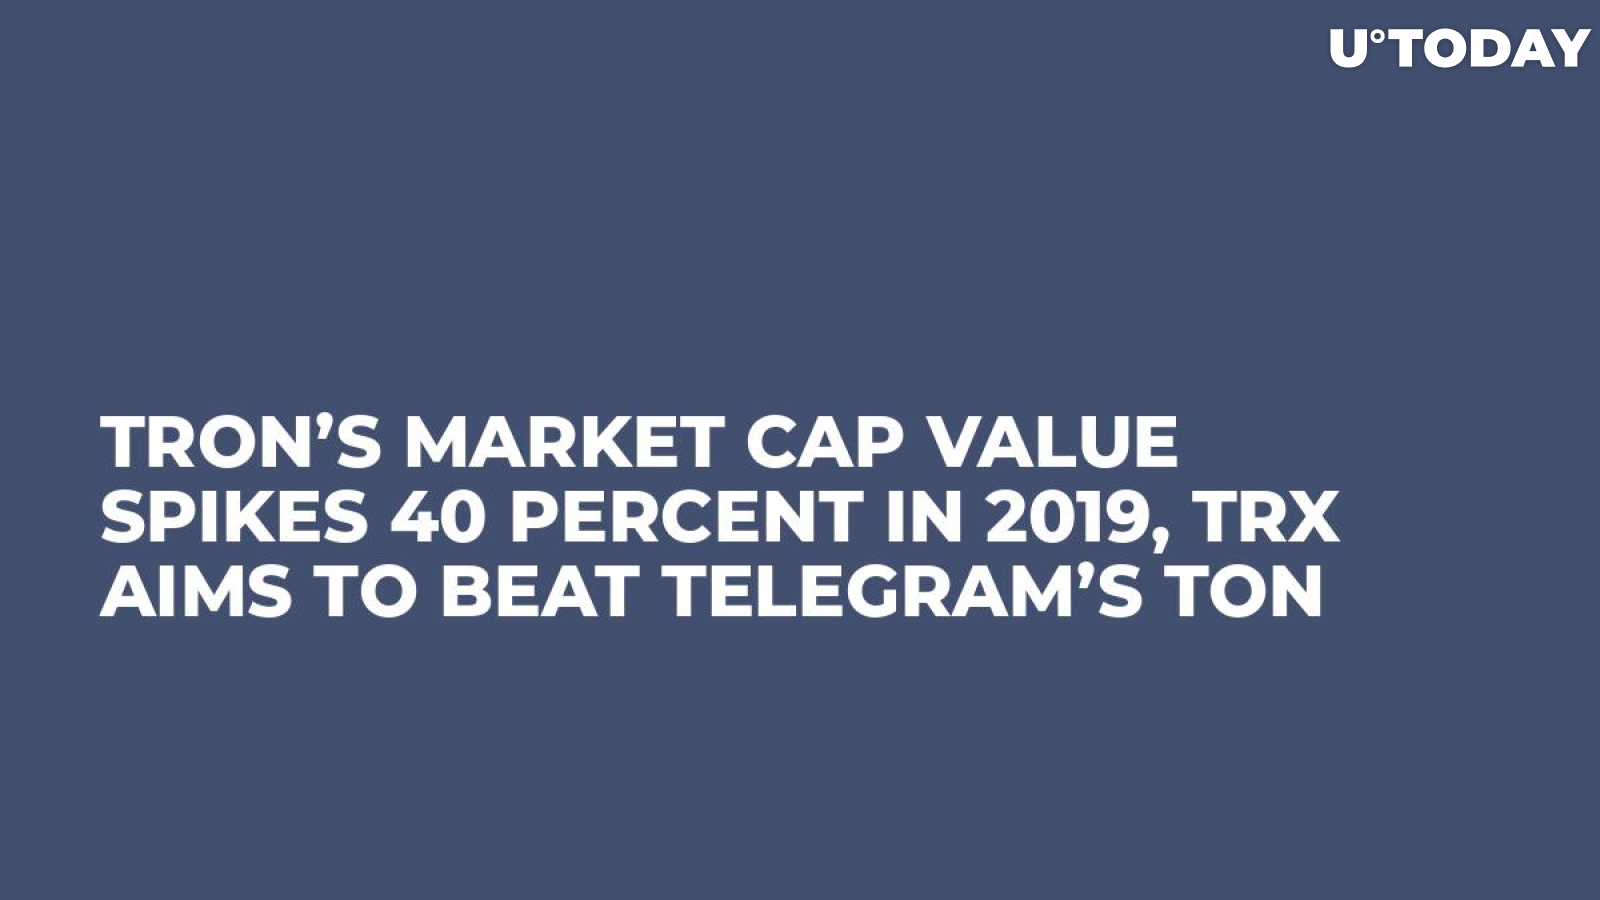 Tron’s Market Cap Value Spikes 40 Percent in 2019, TRX Aims to Beat Telegram’s TON